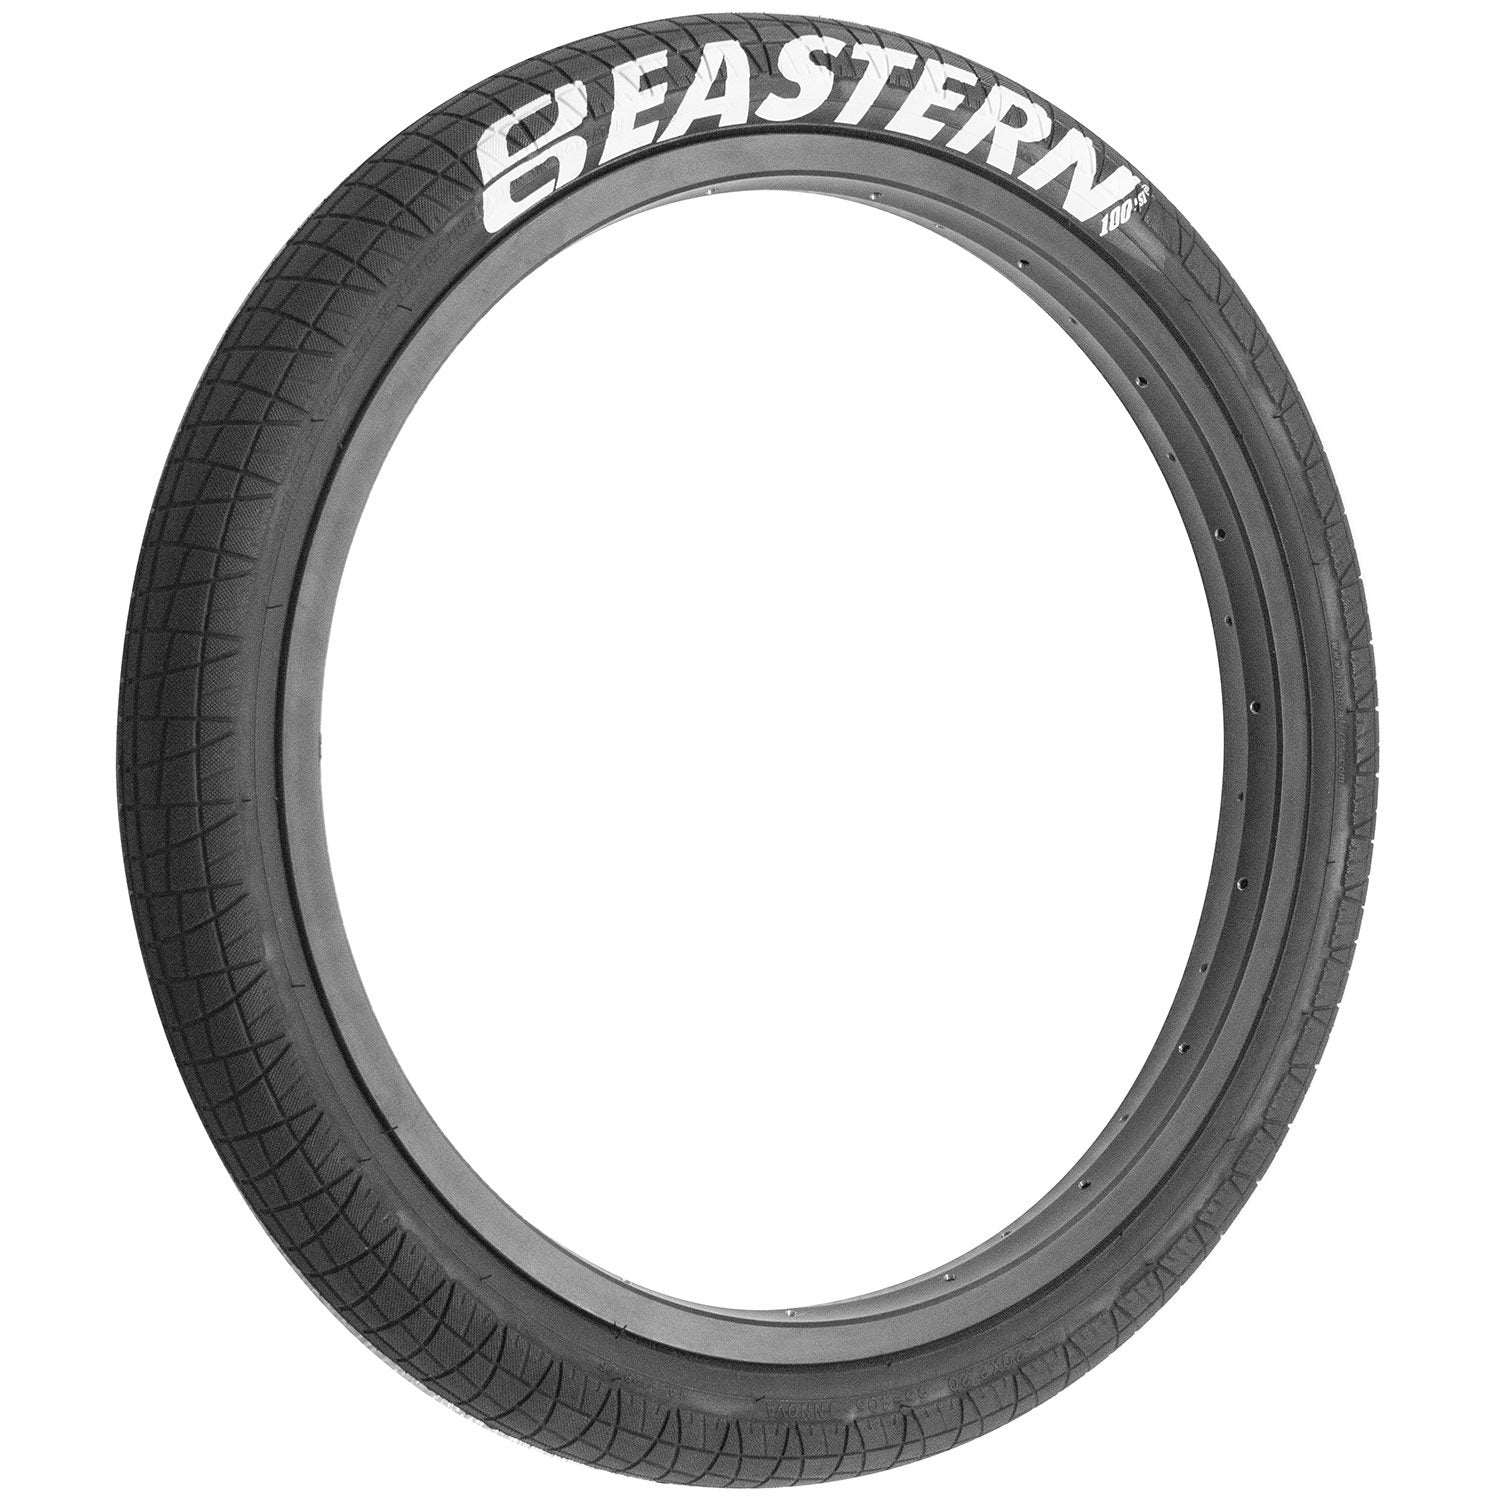 eastern bikes 20 inch x 2.2 throttle tires 100psi black white 1